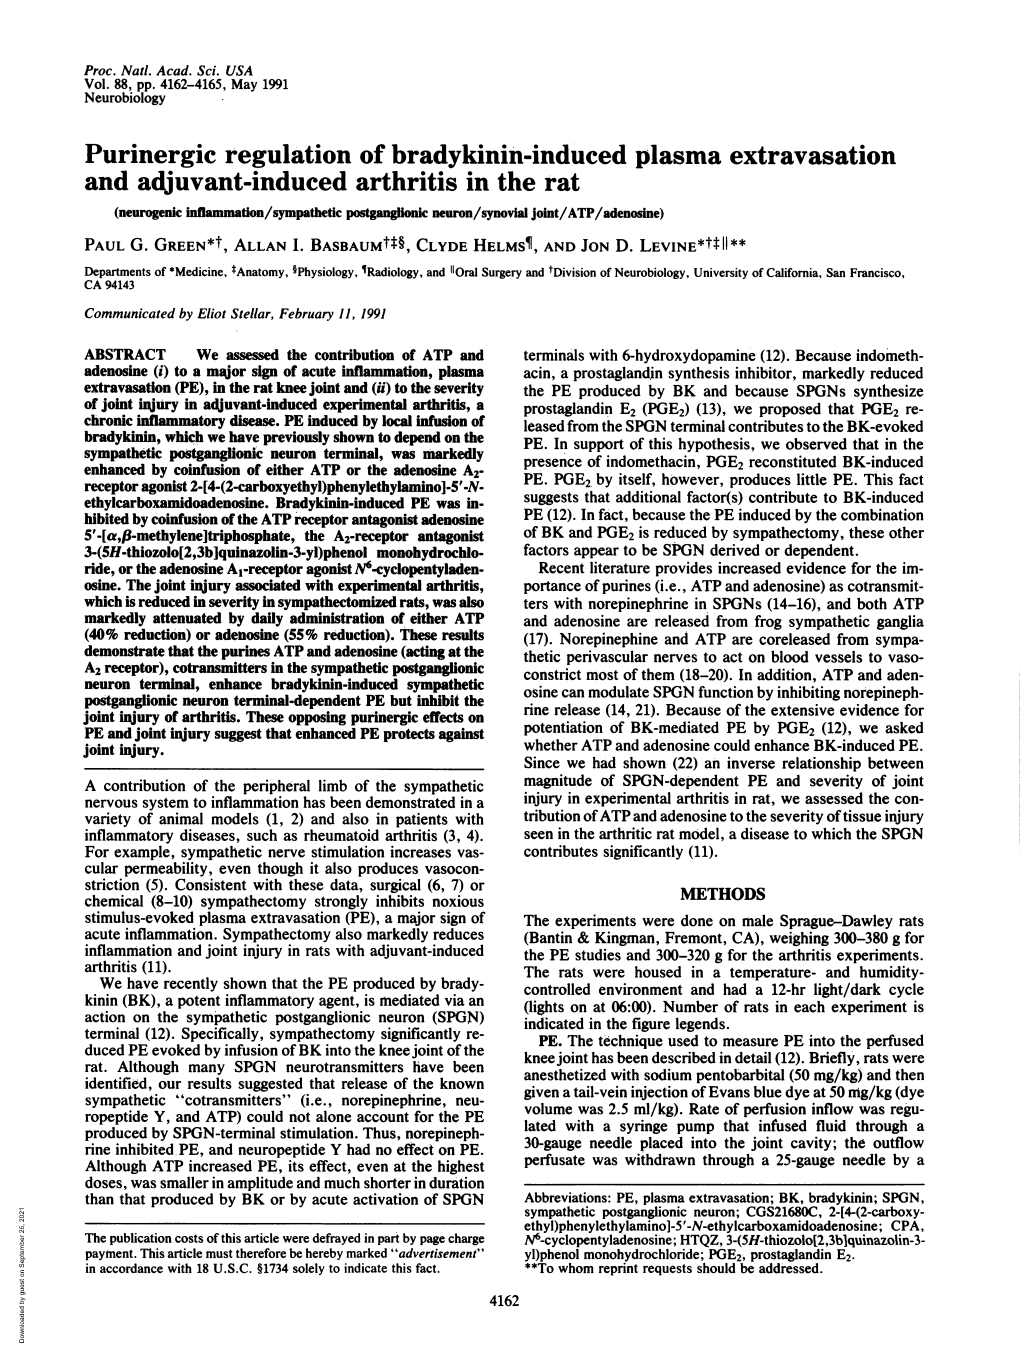 Purinergic Regulation of Bradykinin-Induced Plasma